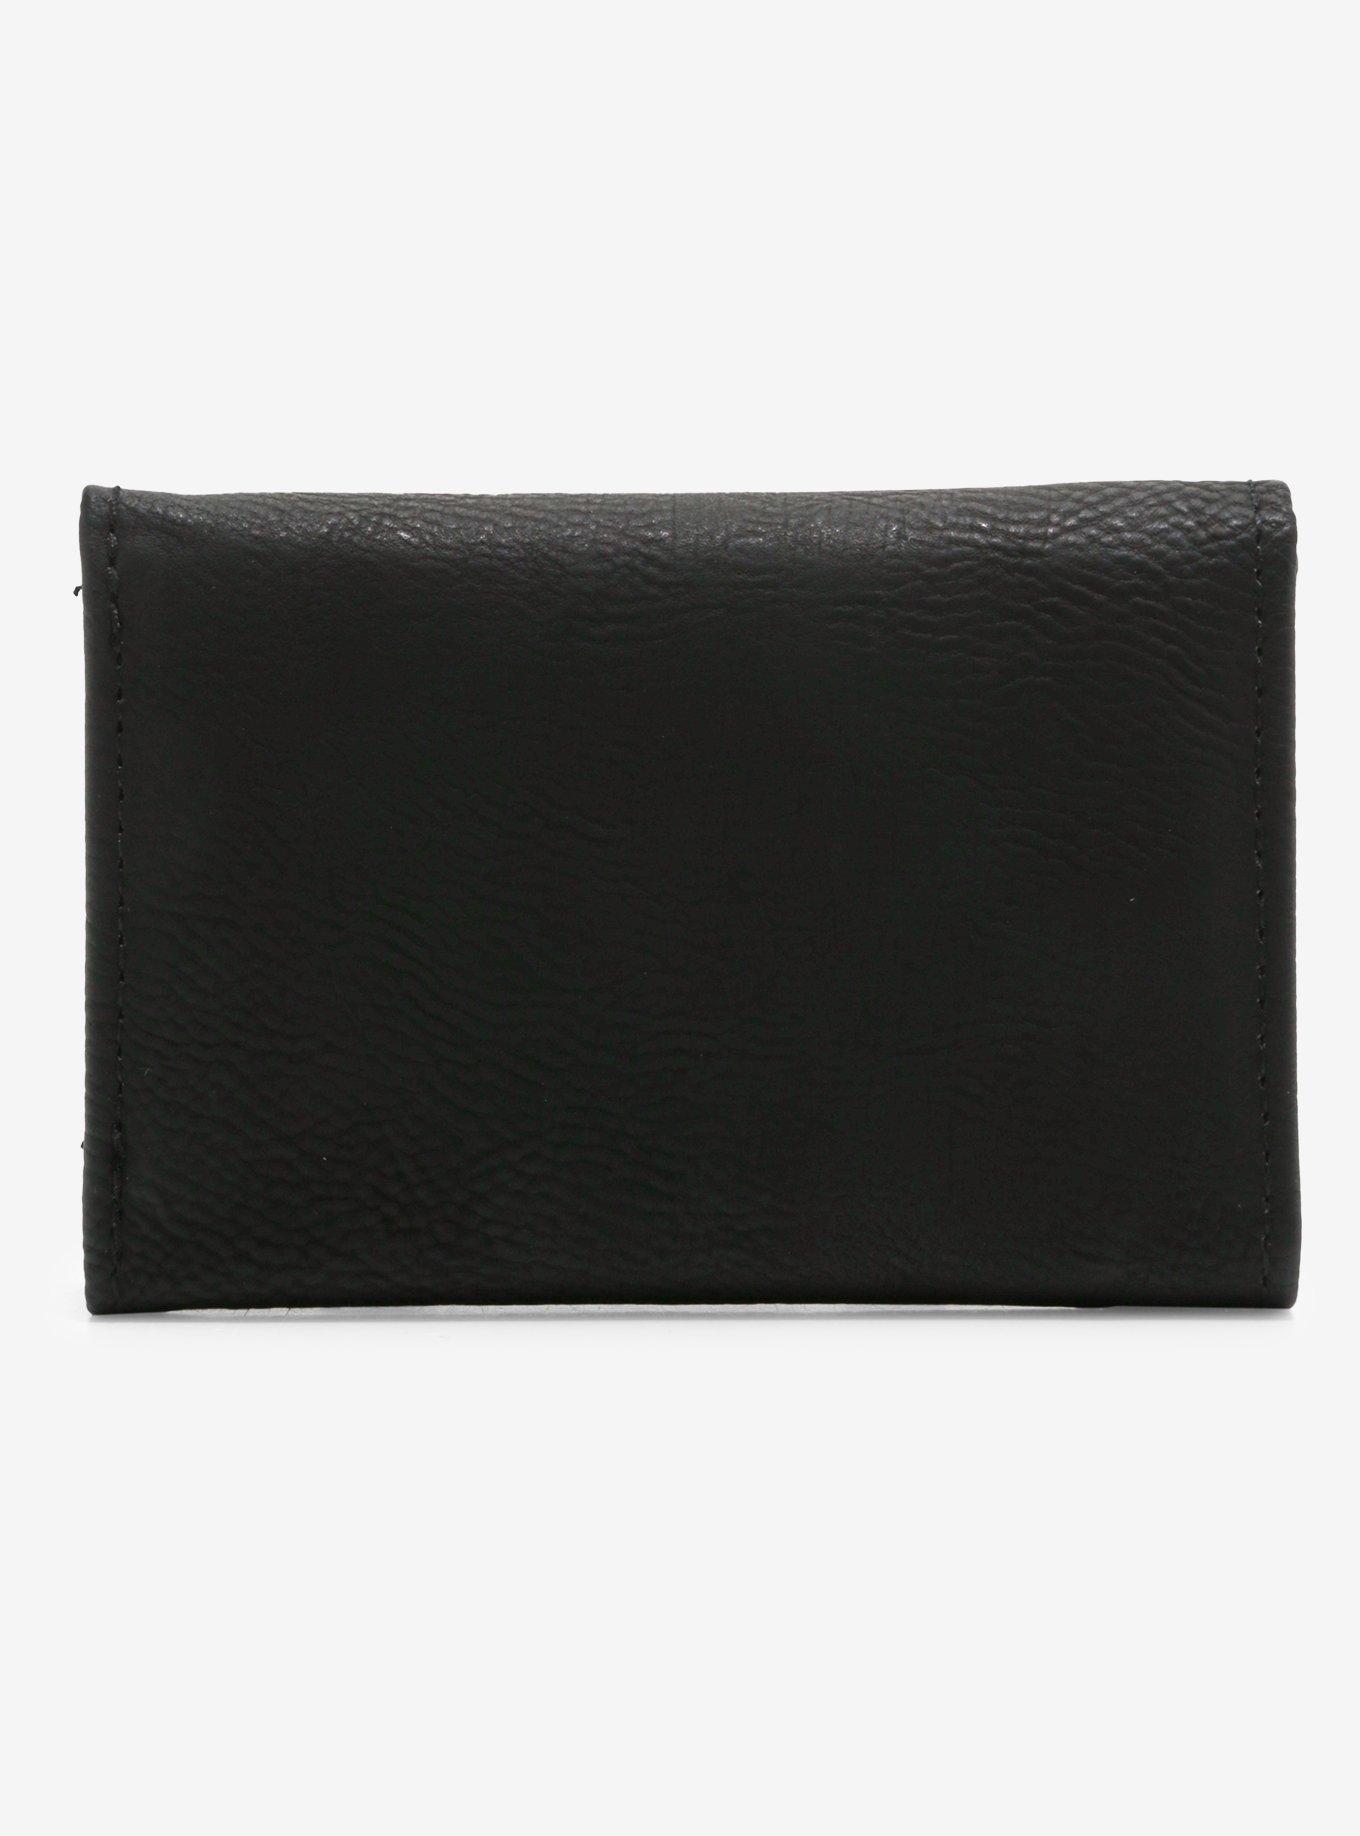 Black Trifold Wallet